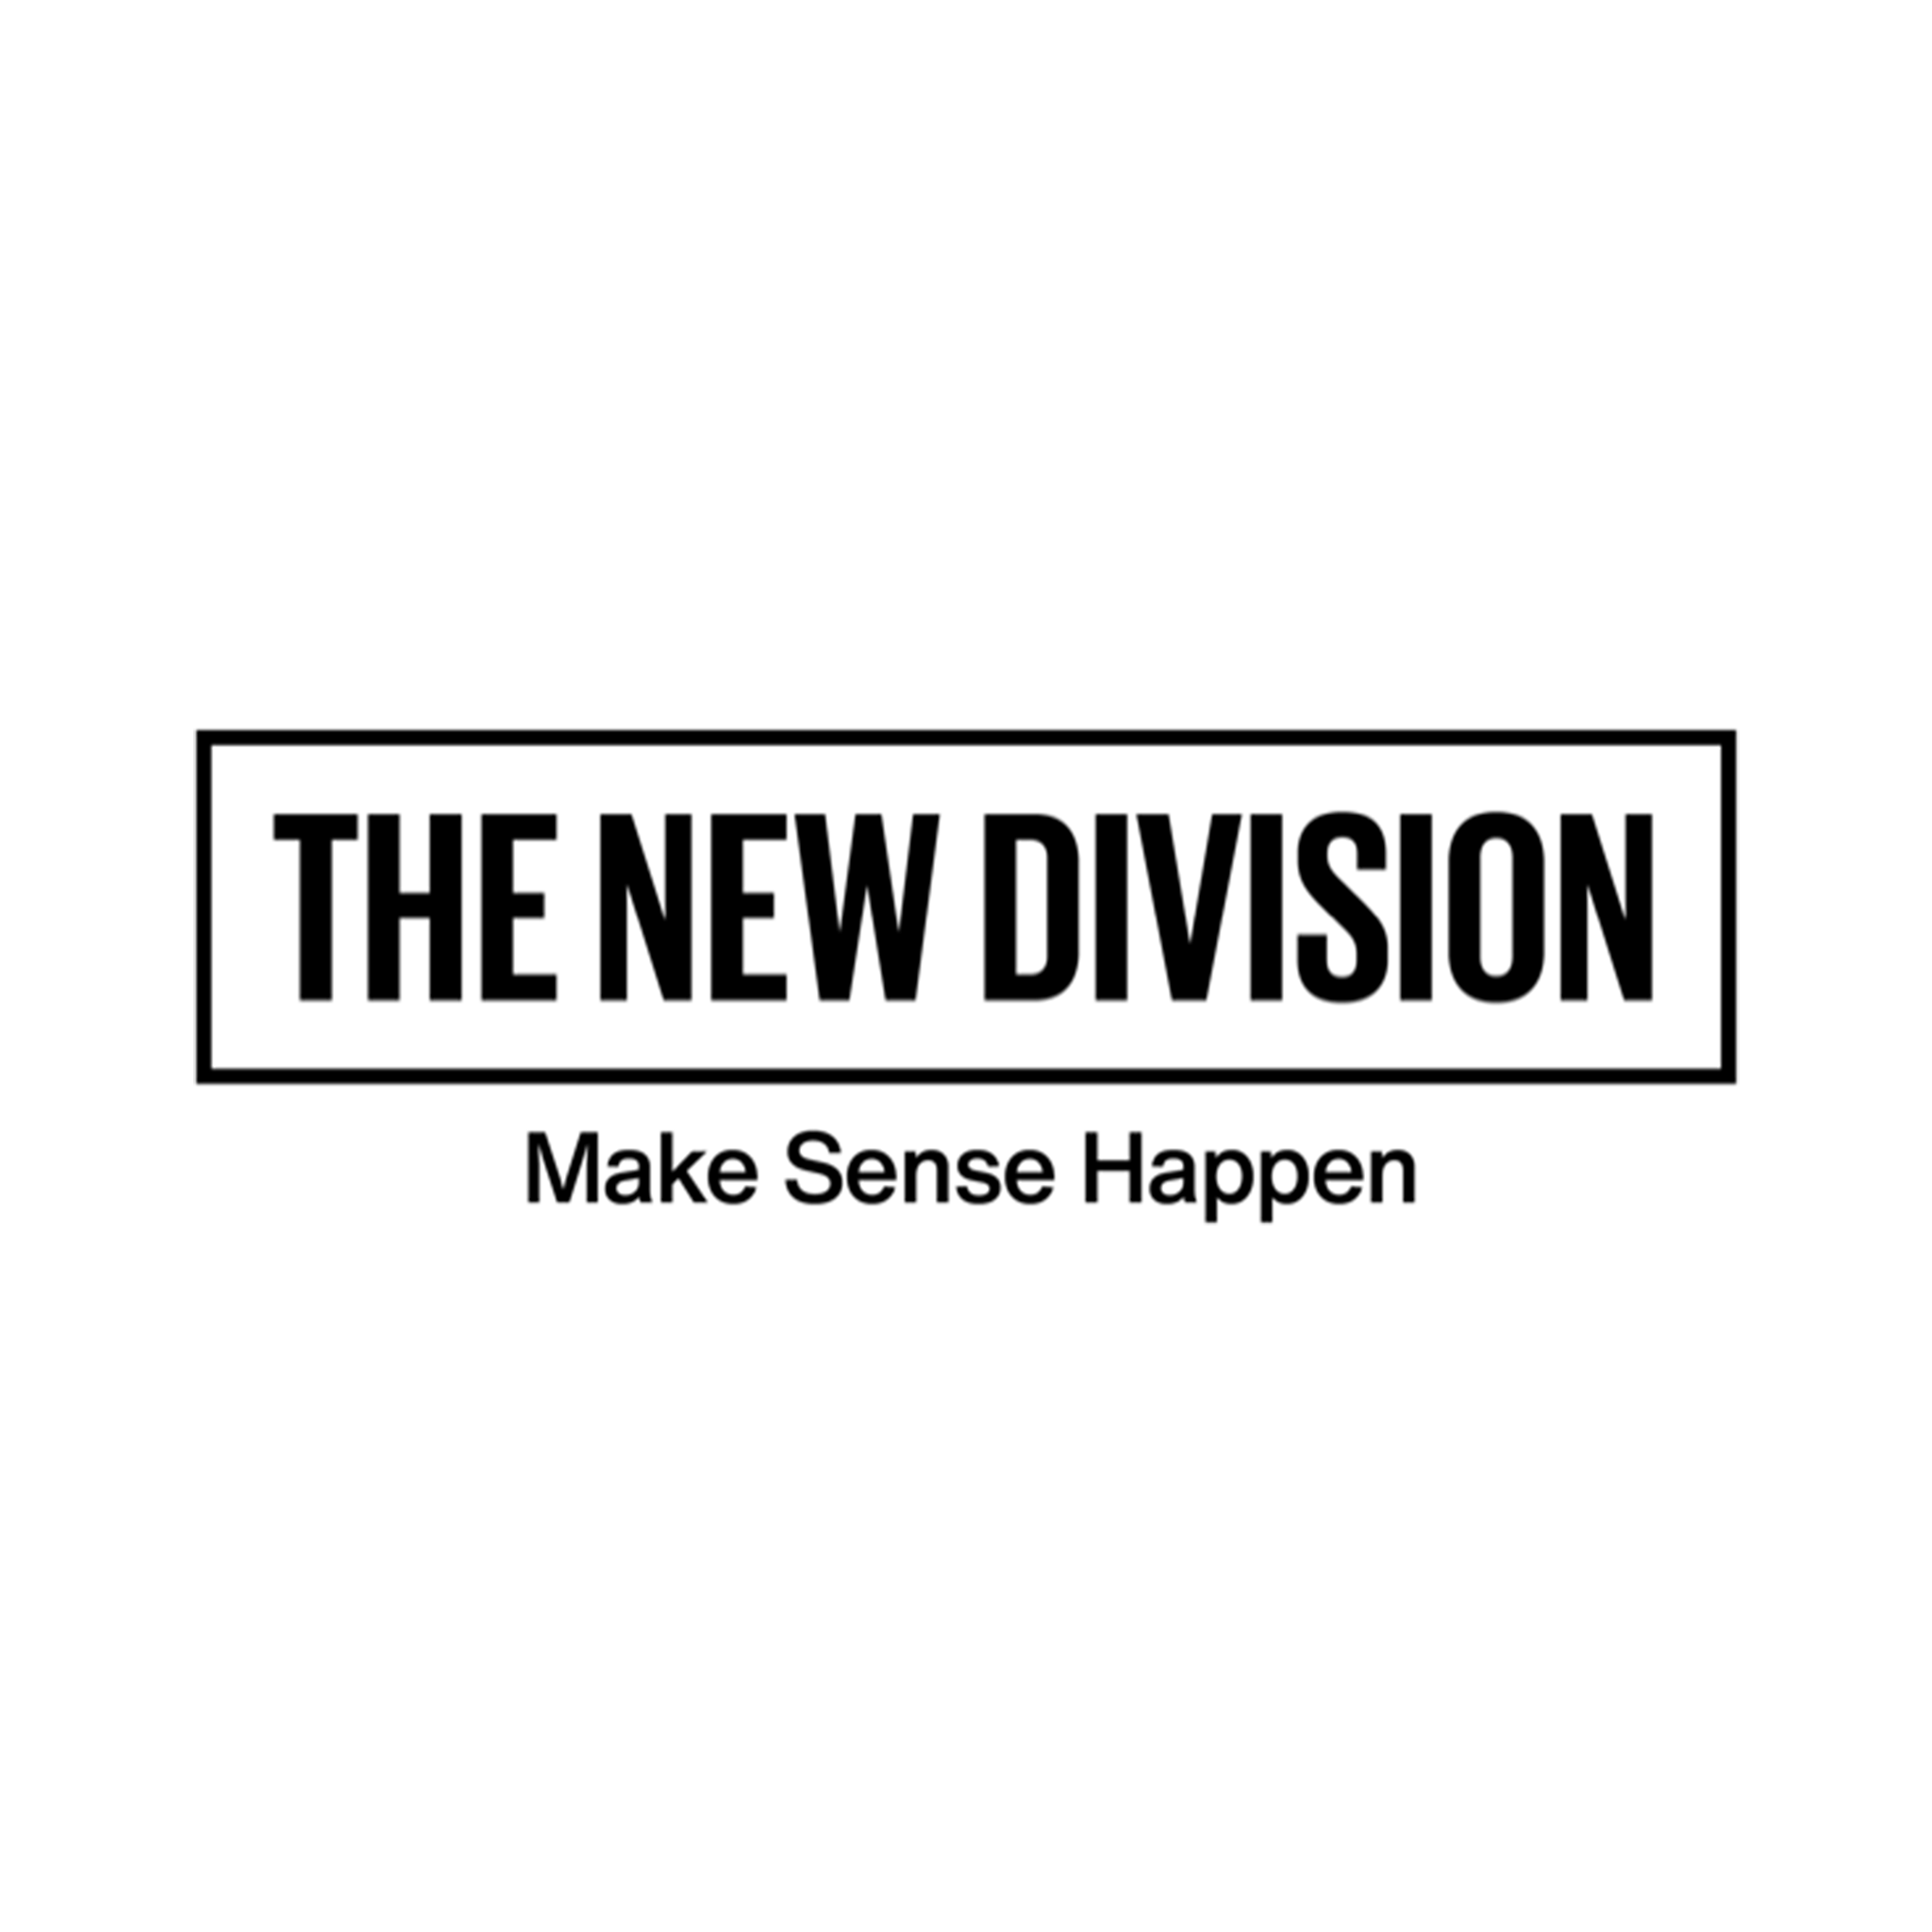 The New Division logo in black